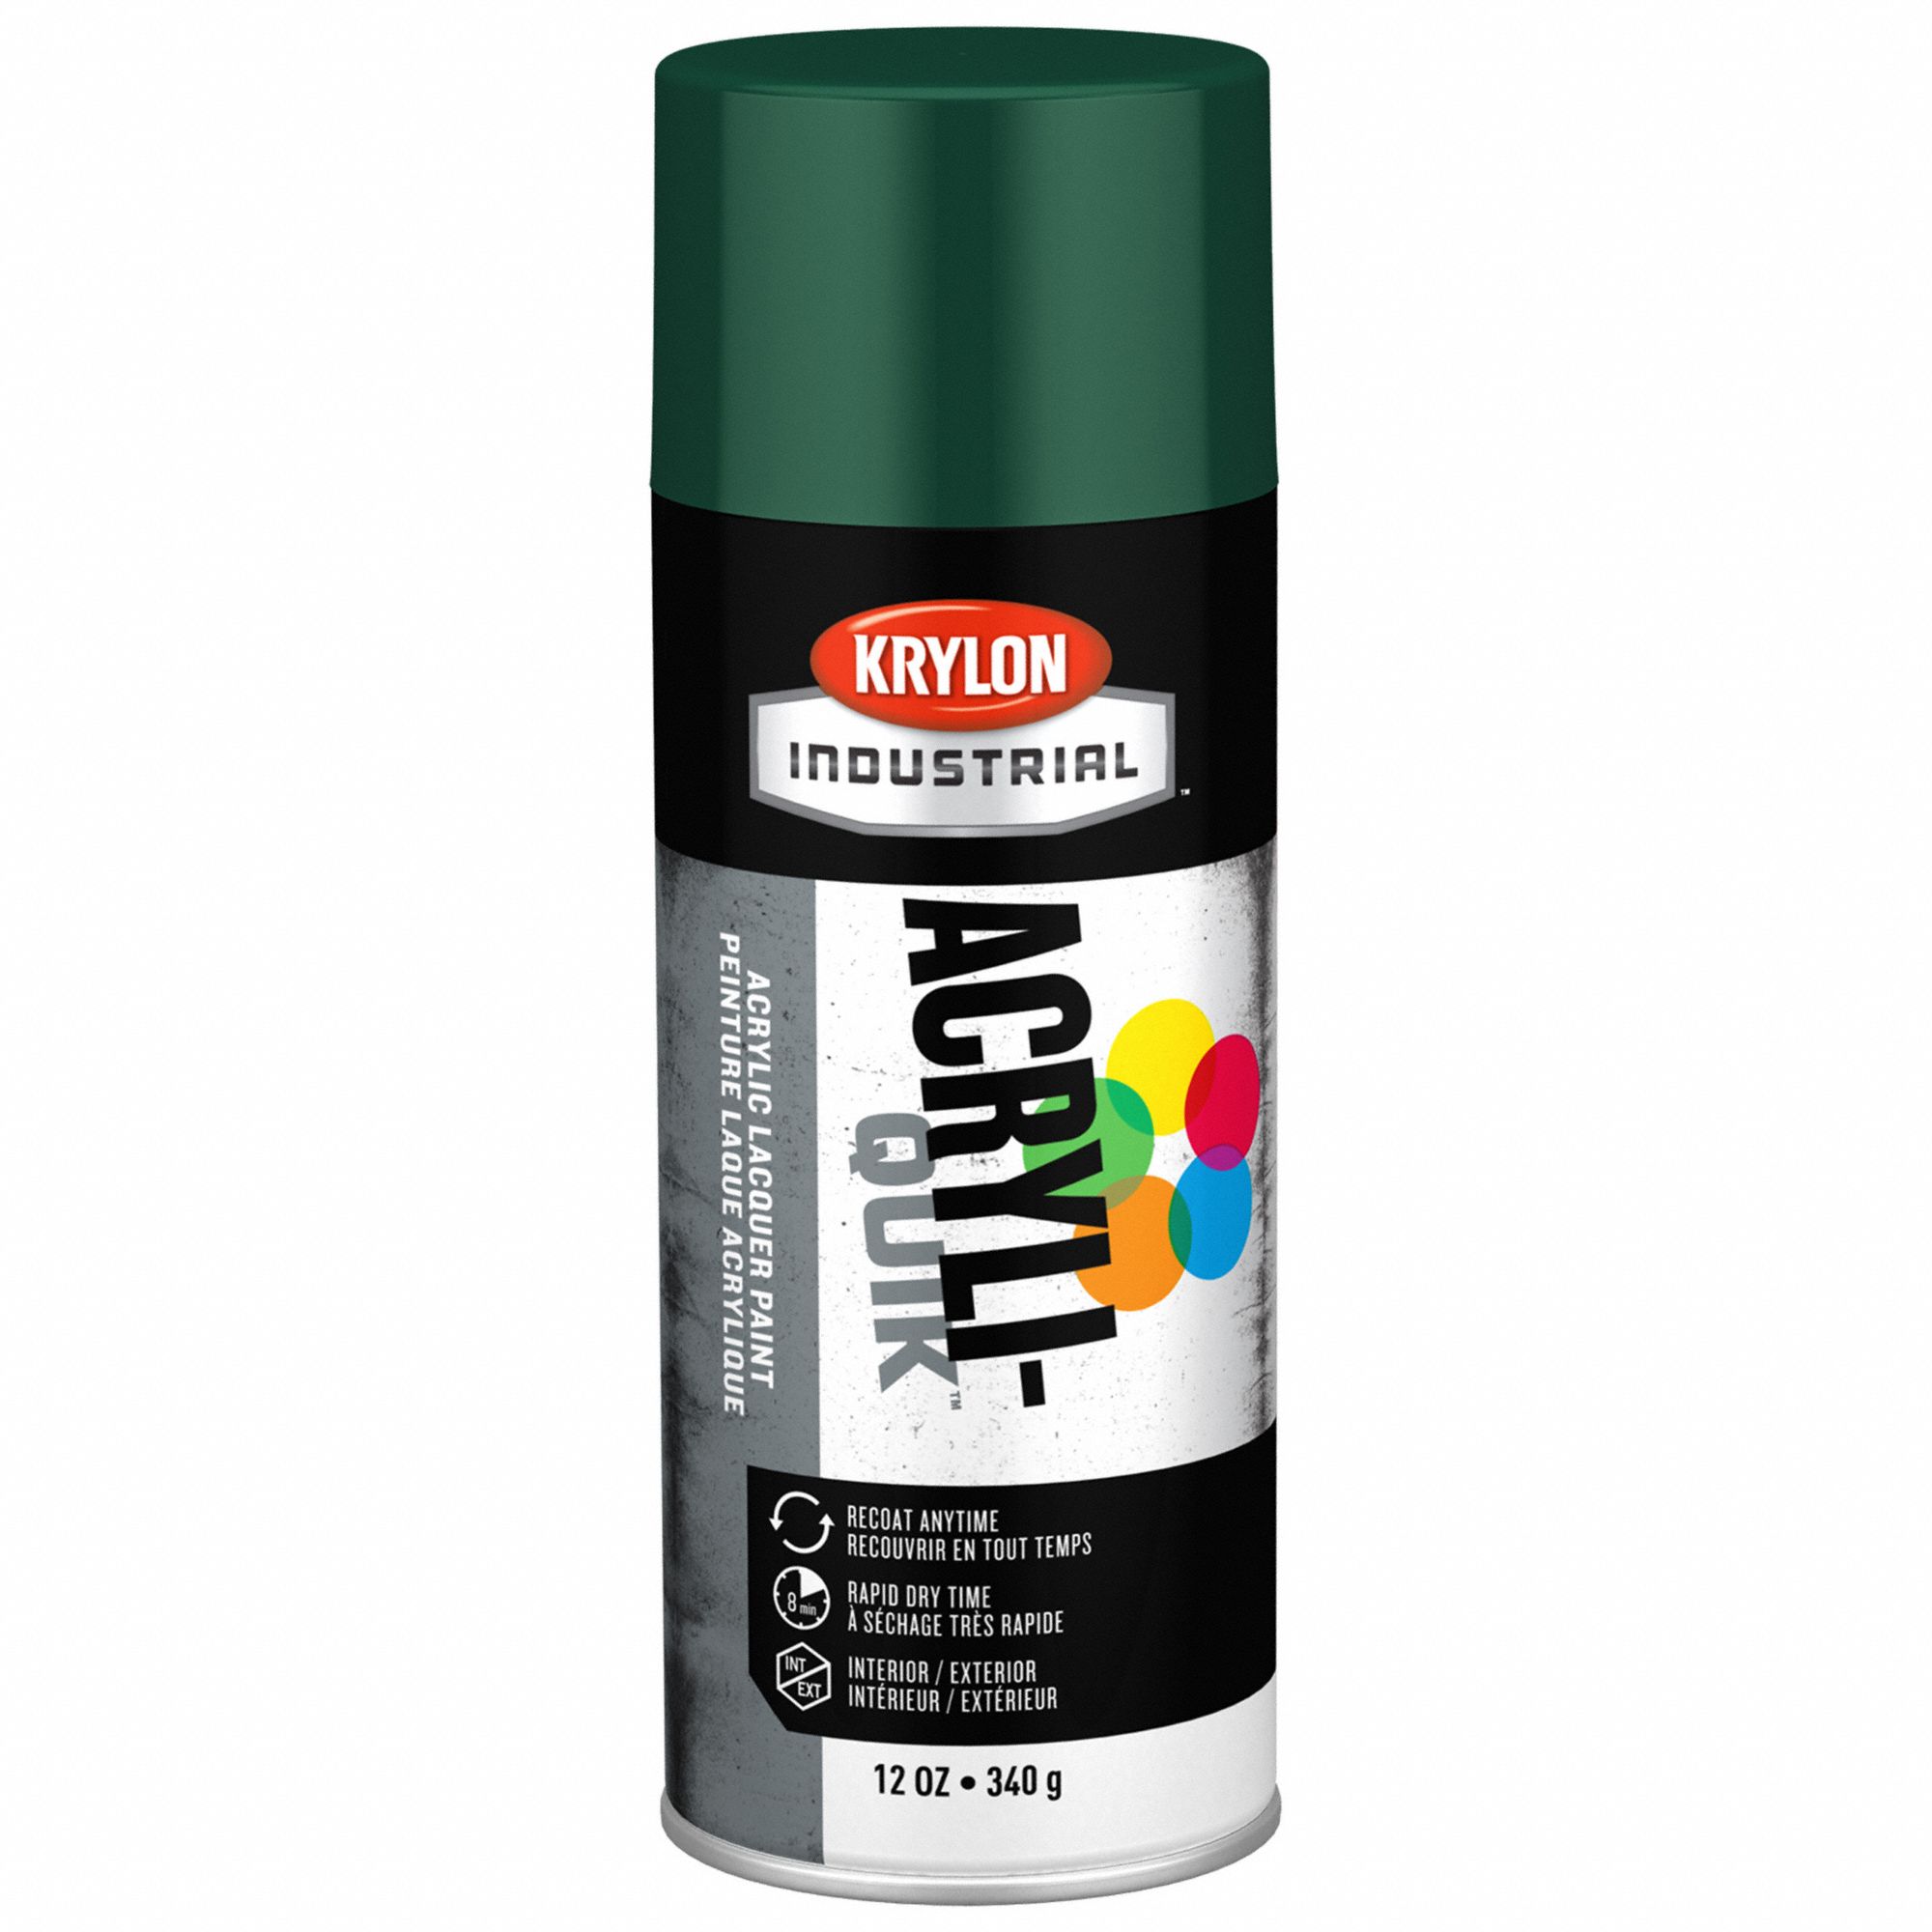 Krylon Industrial K02001A07 Spray Paint, Hunter Green, Gloss